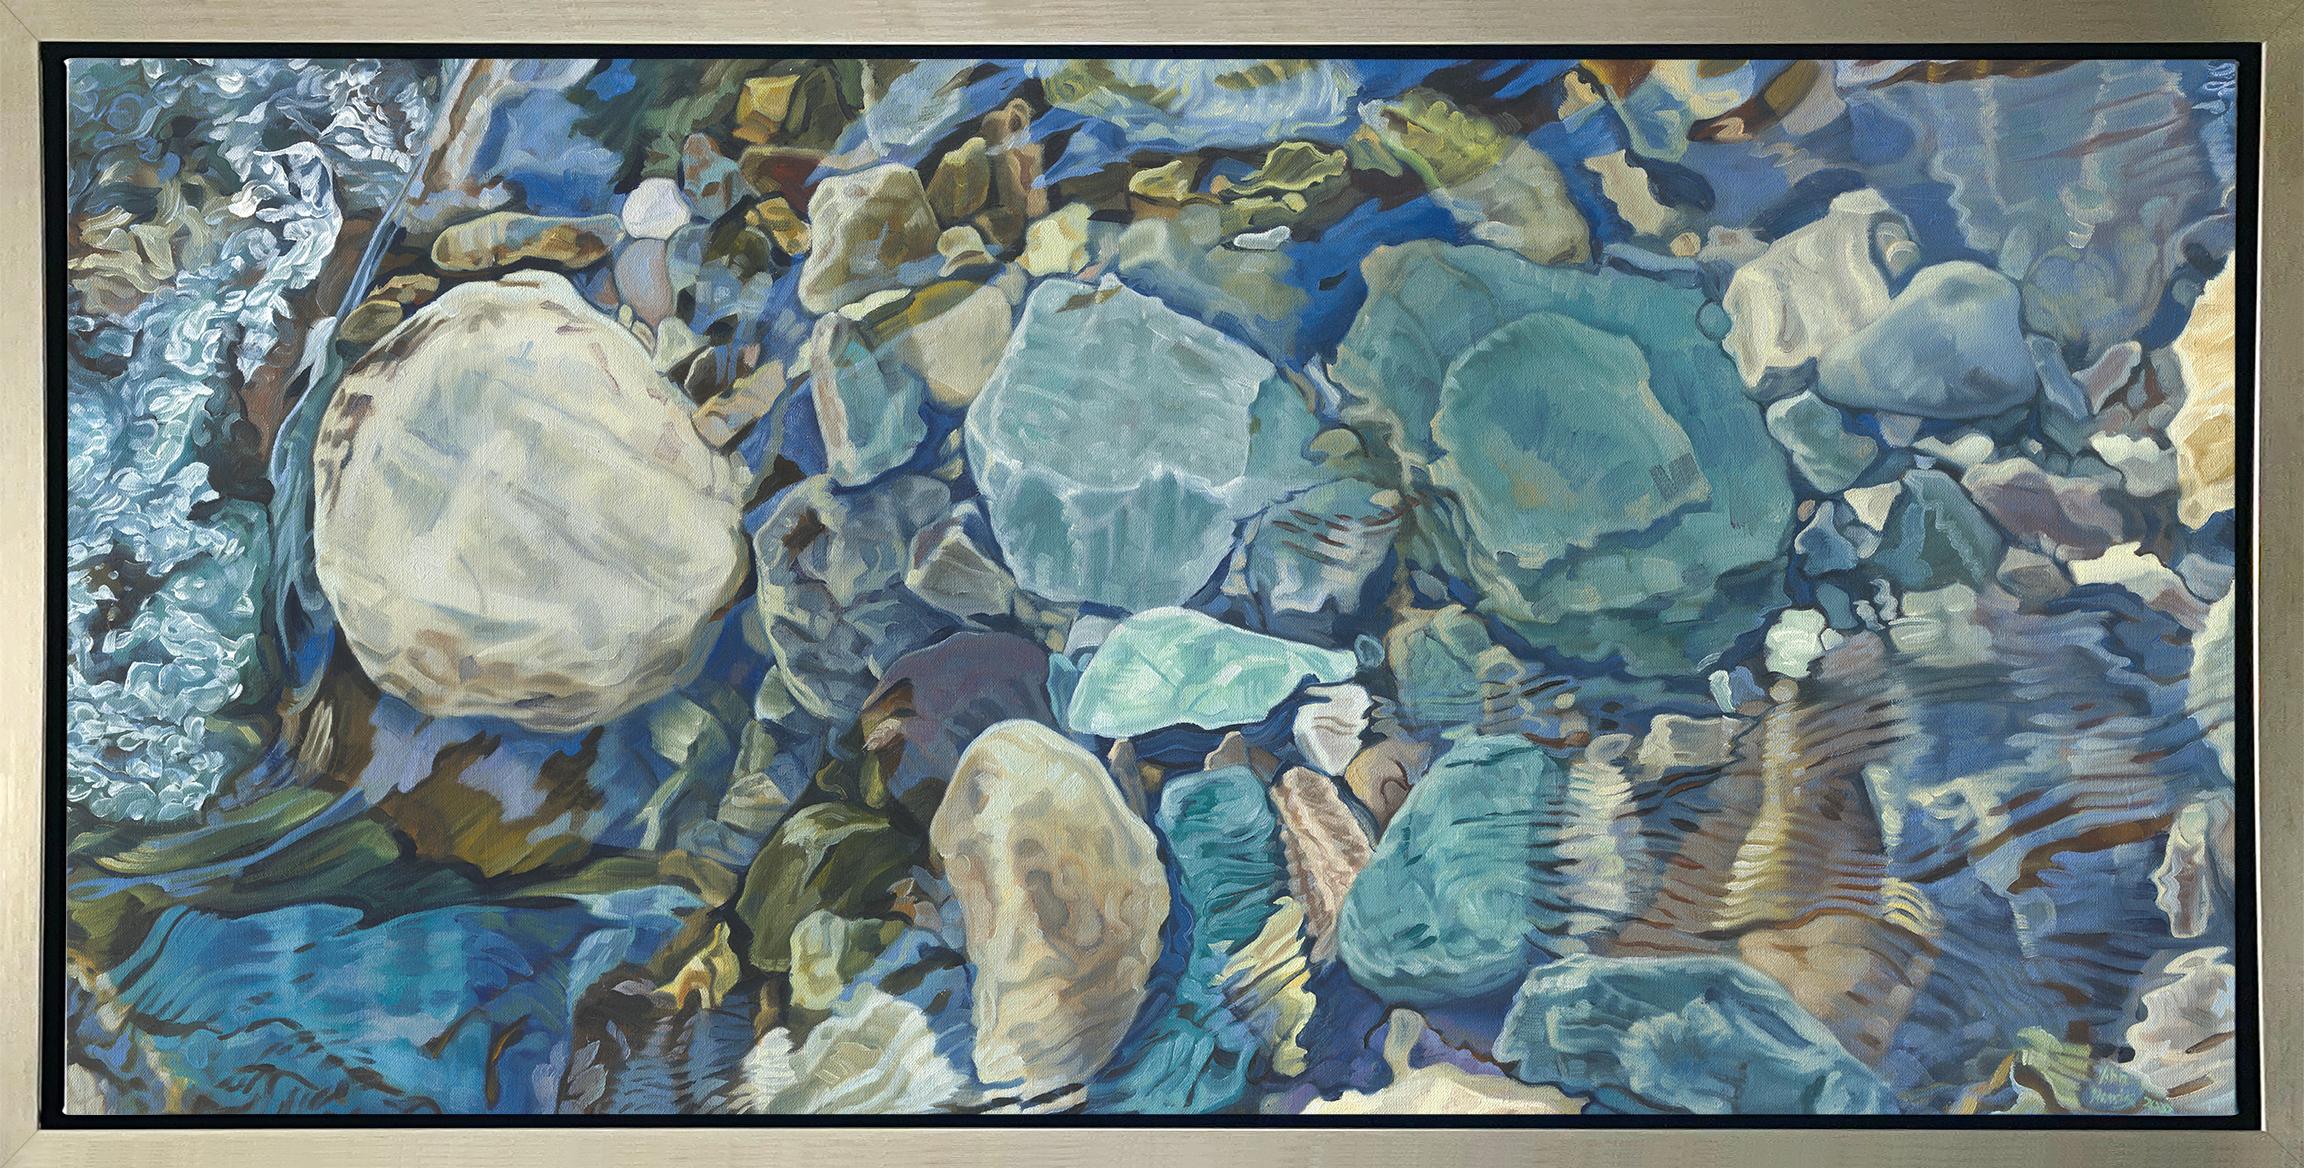 John Harris (painter) Landscape Print - "Rocky River 8, " Framed Limited Edition Giclee Print, 12" x 24"